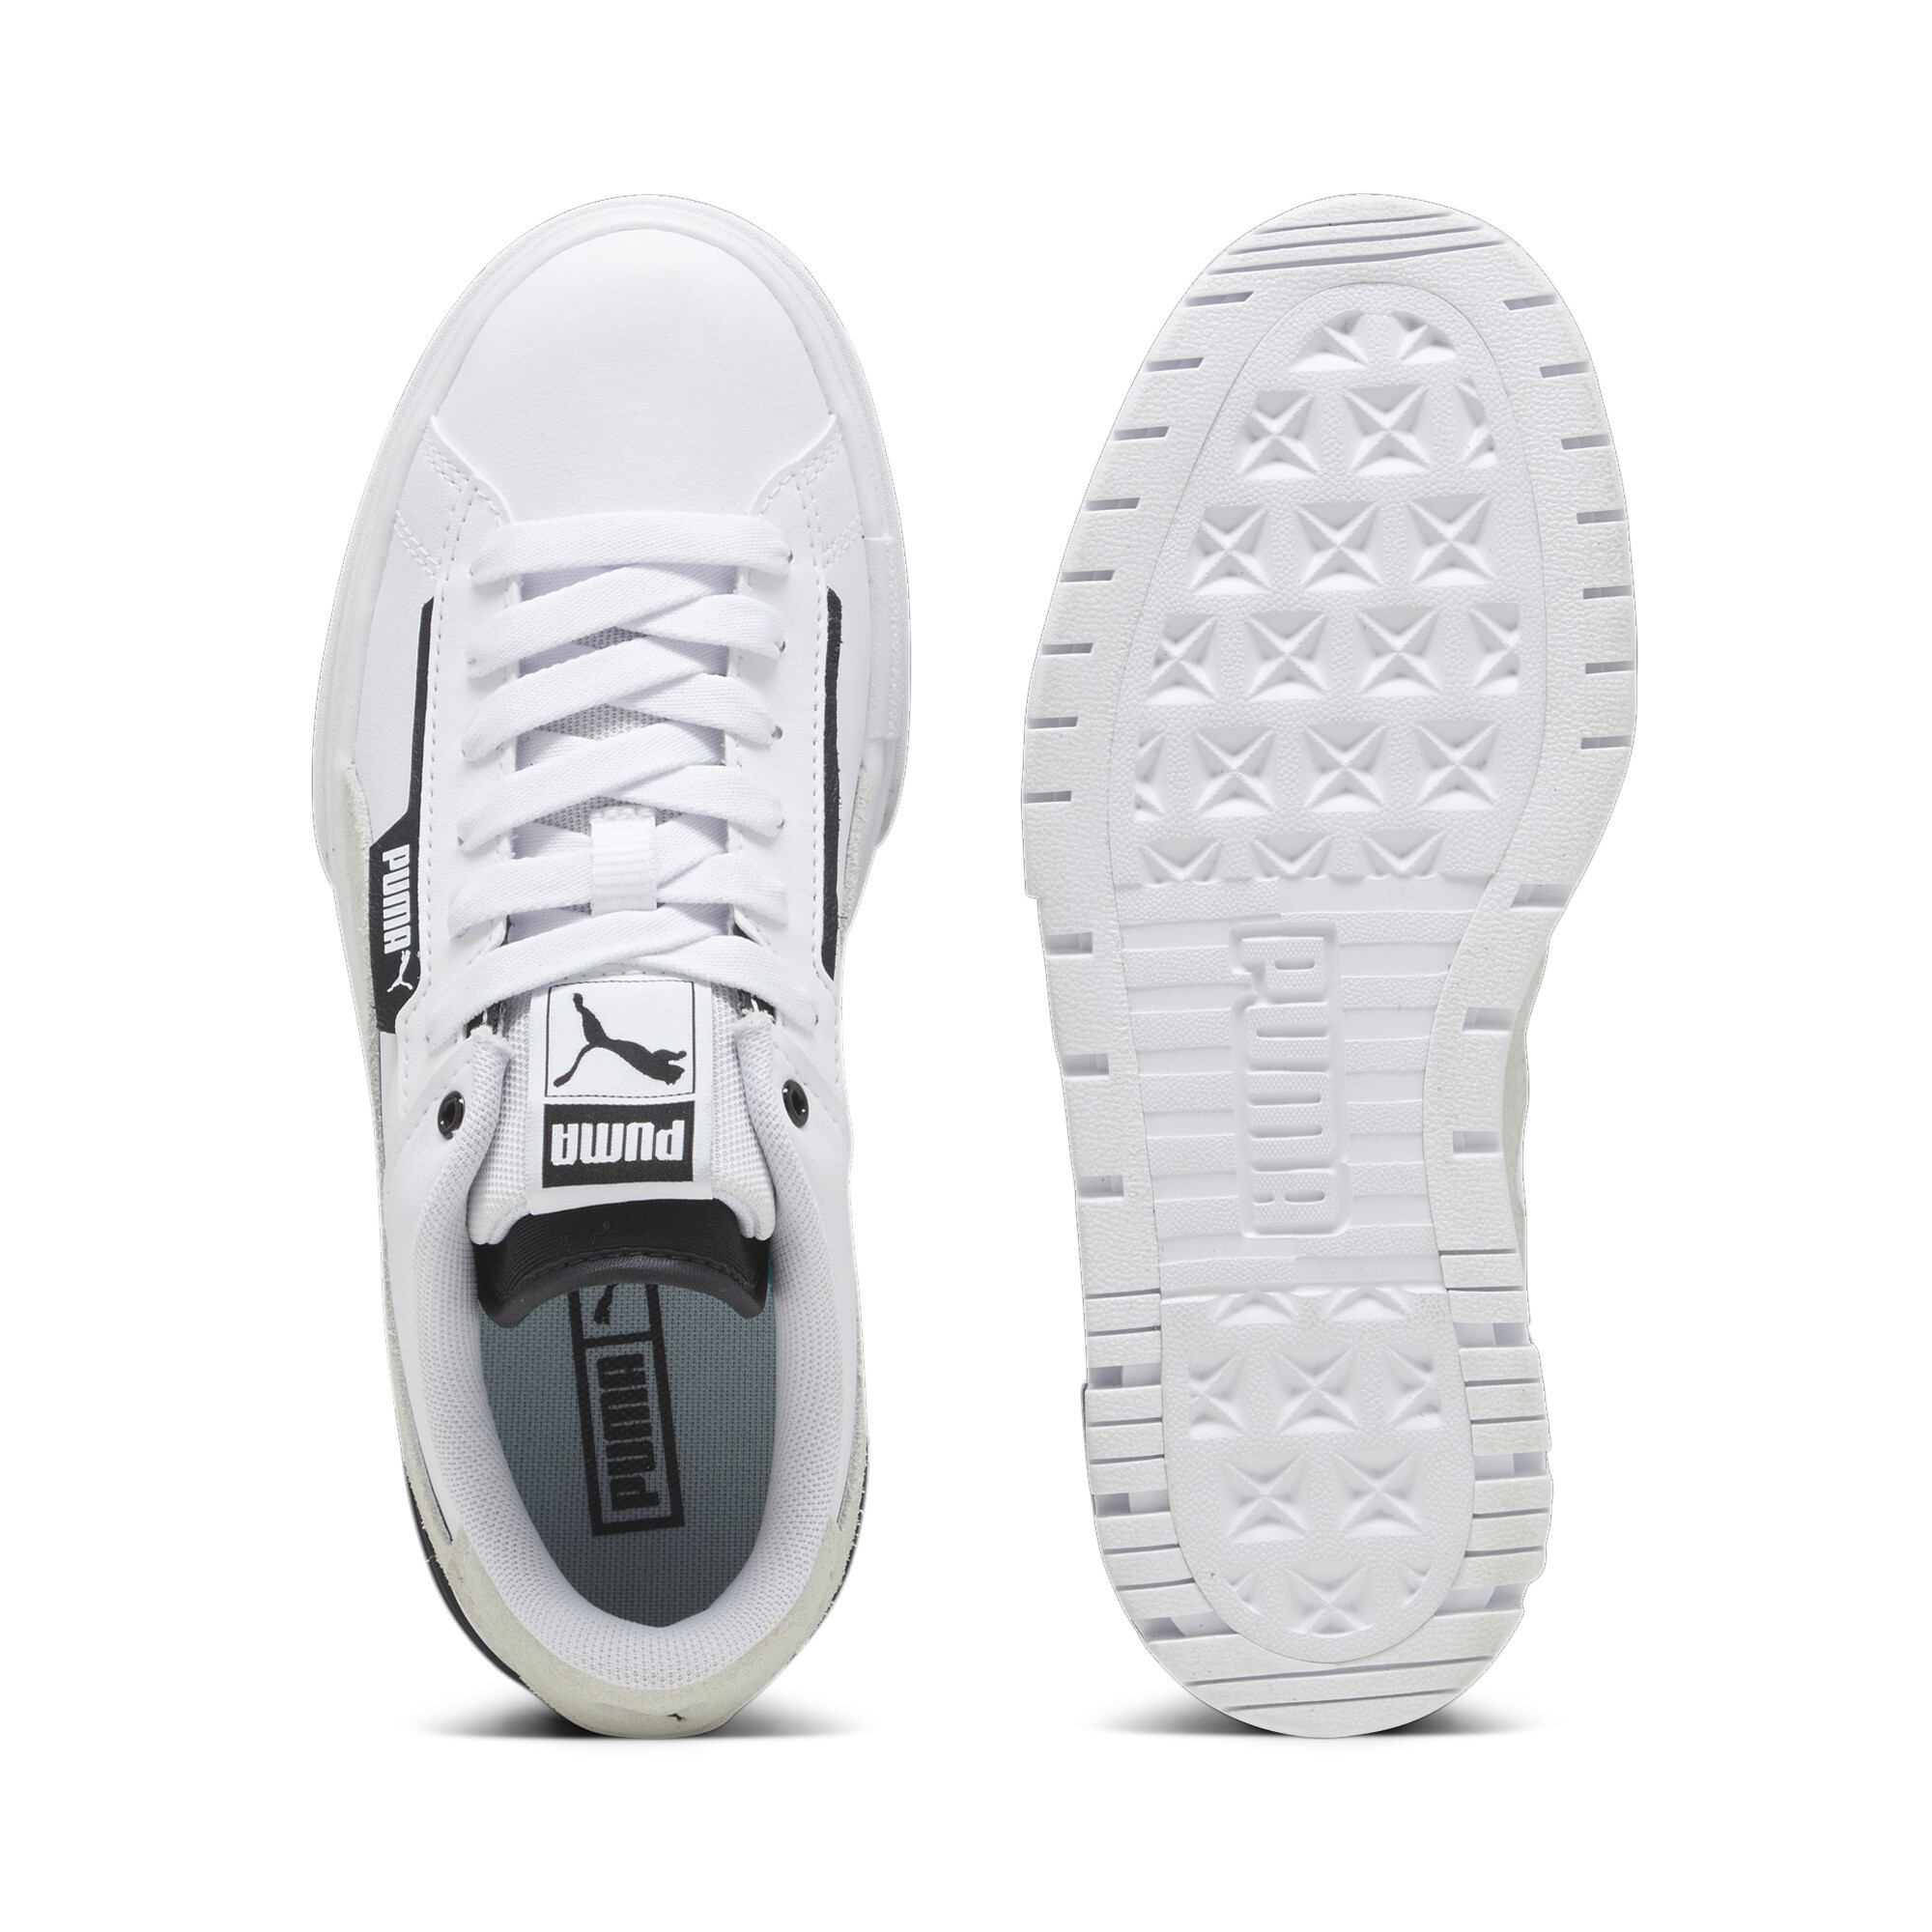 Women's PUMA Mayze Crashed Sneakers In White, Size EU 38.5